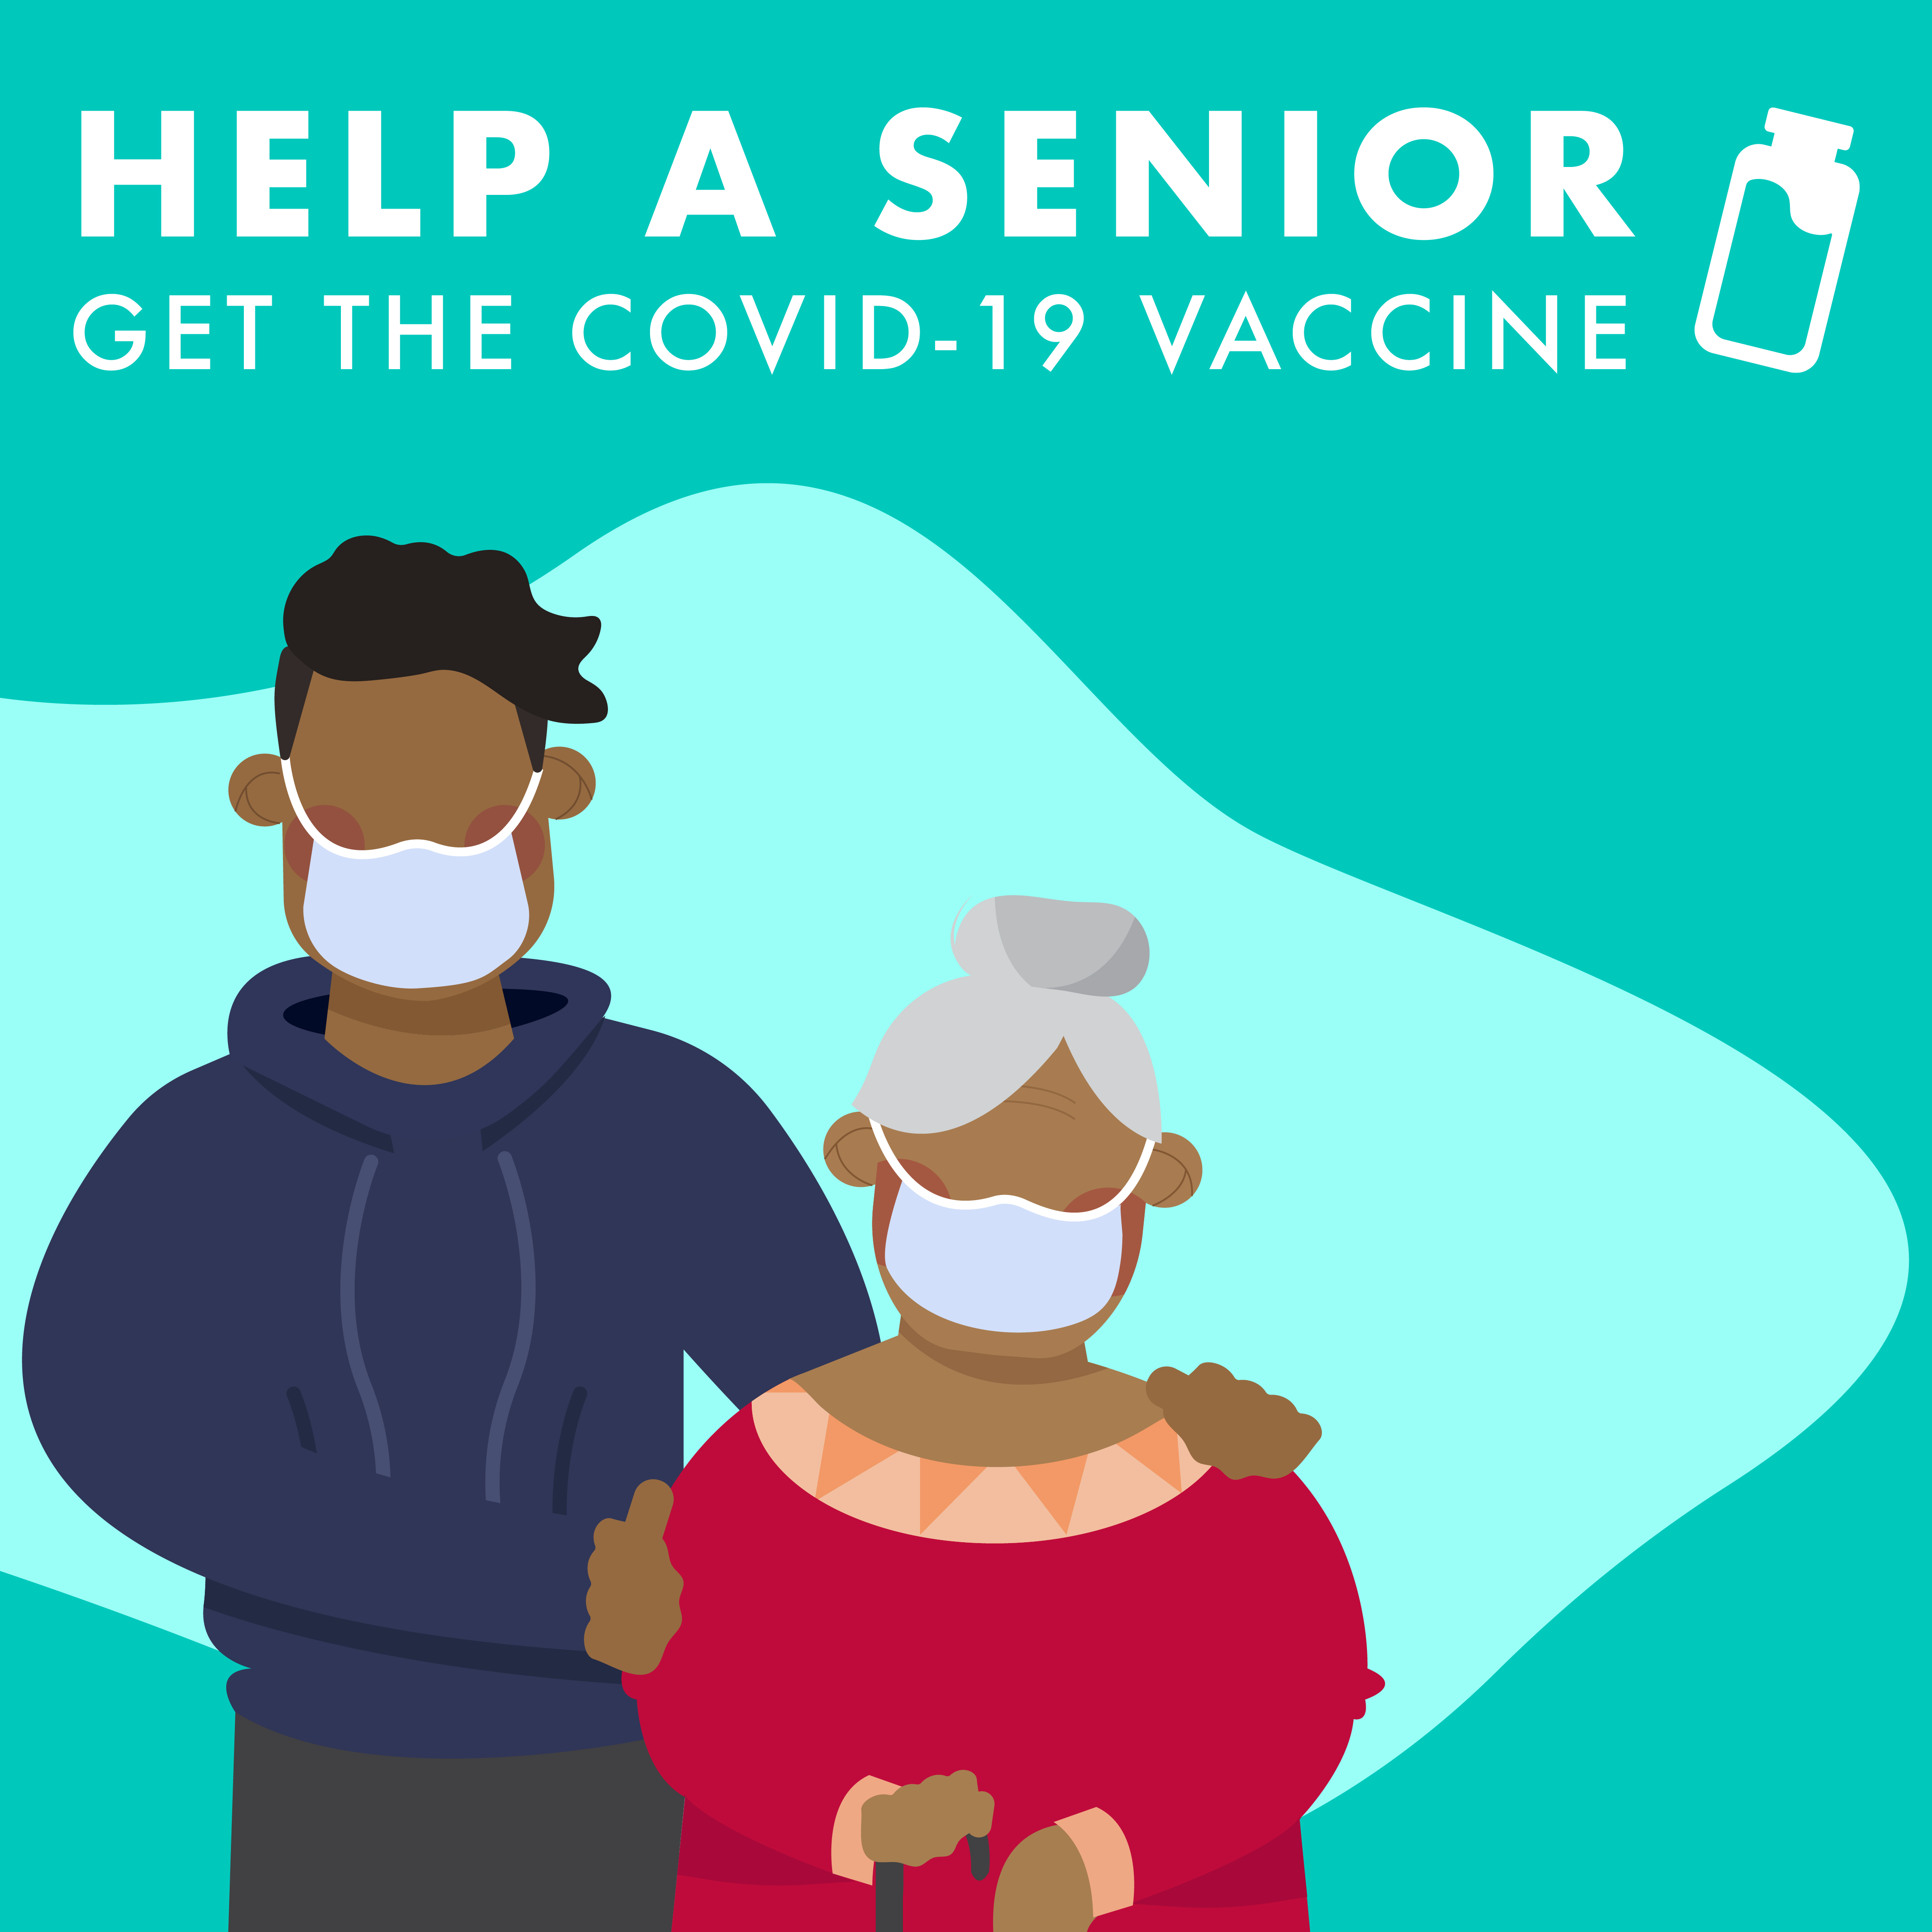 Help a senior get a COVID-19 vaccine